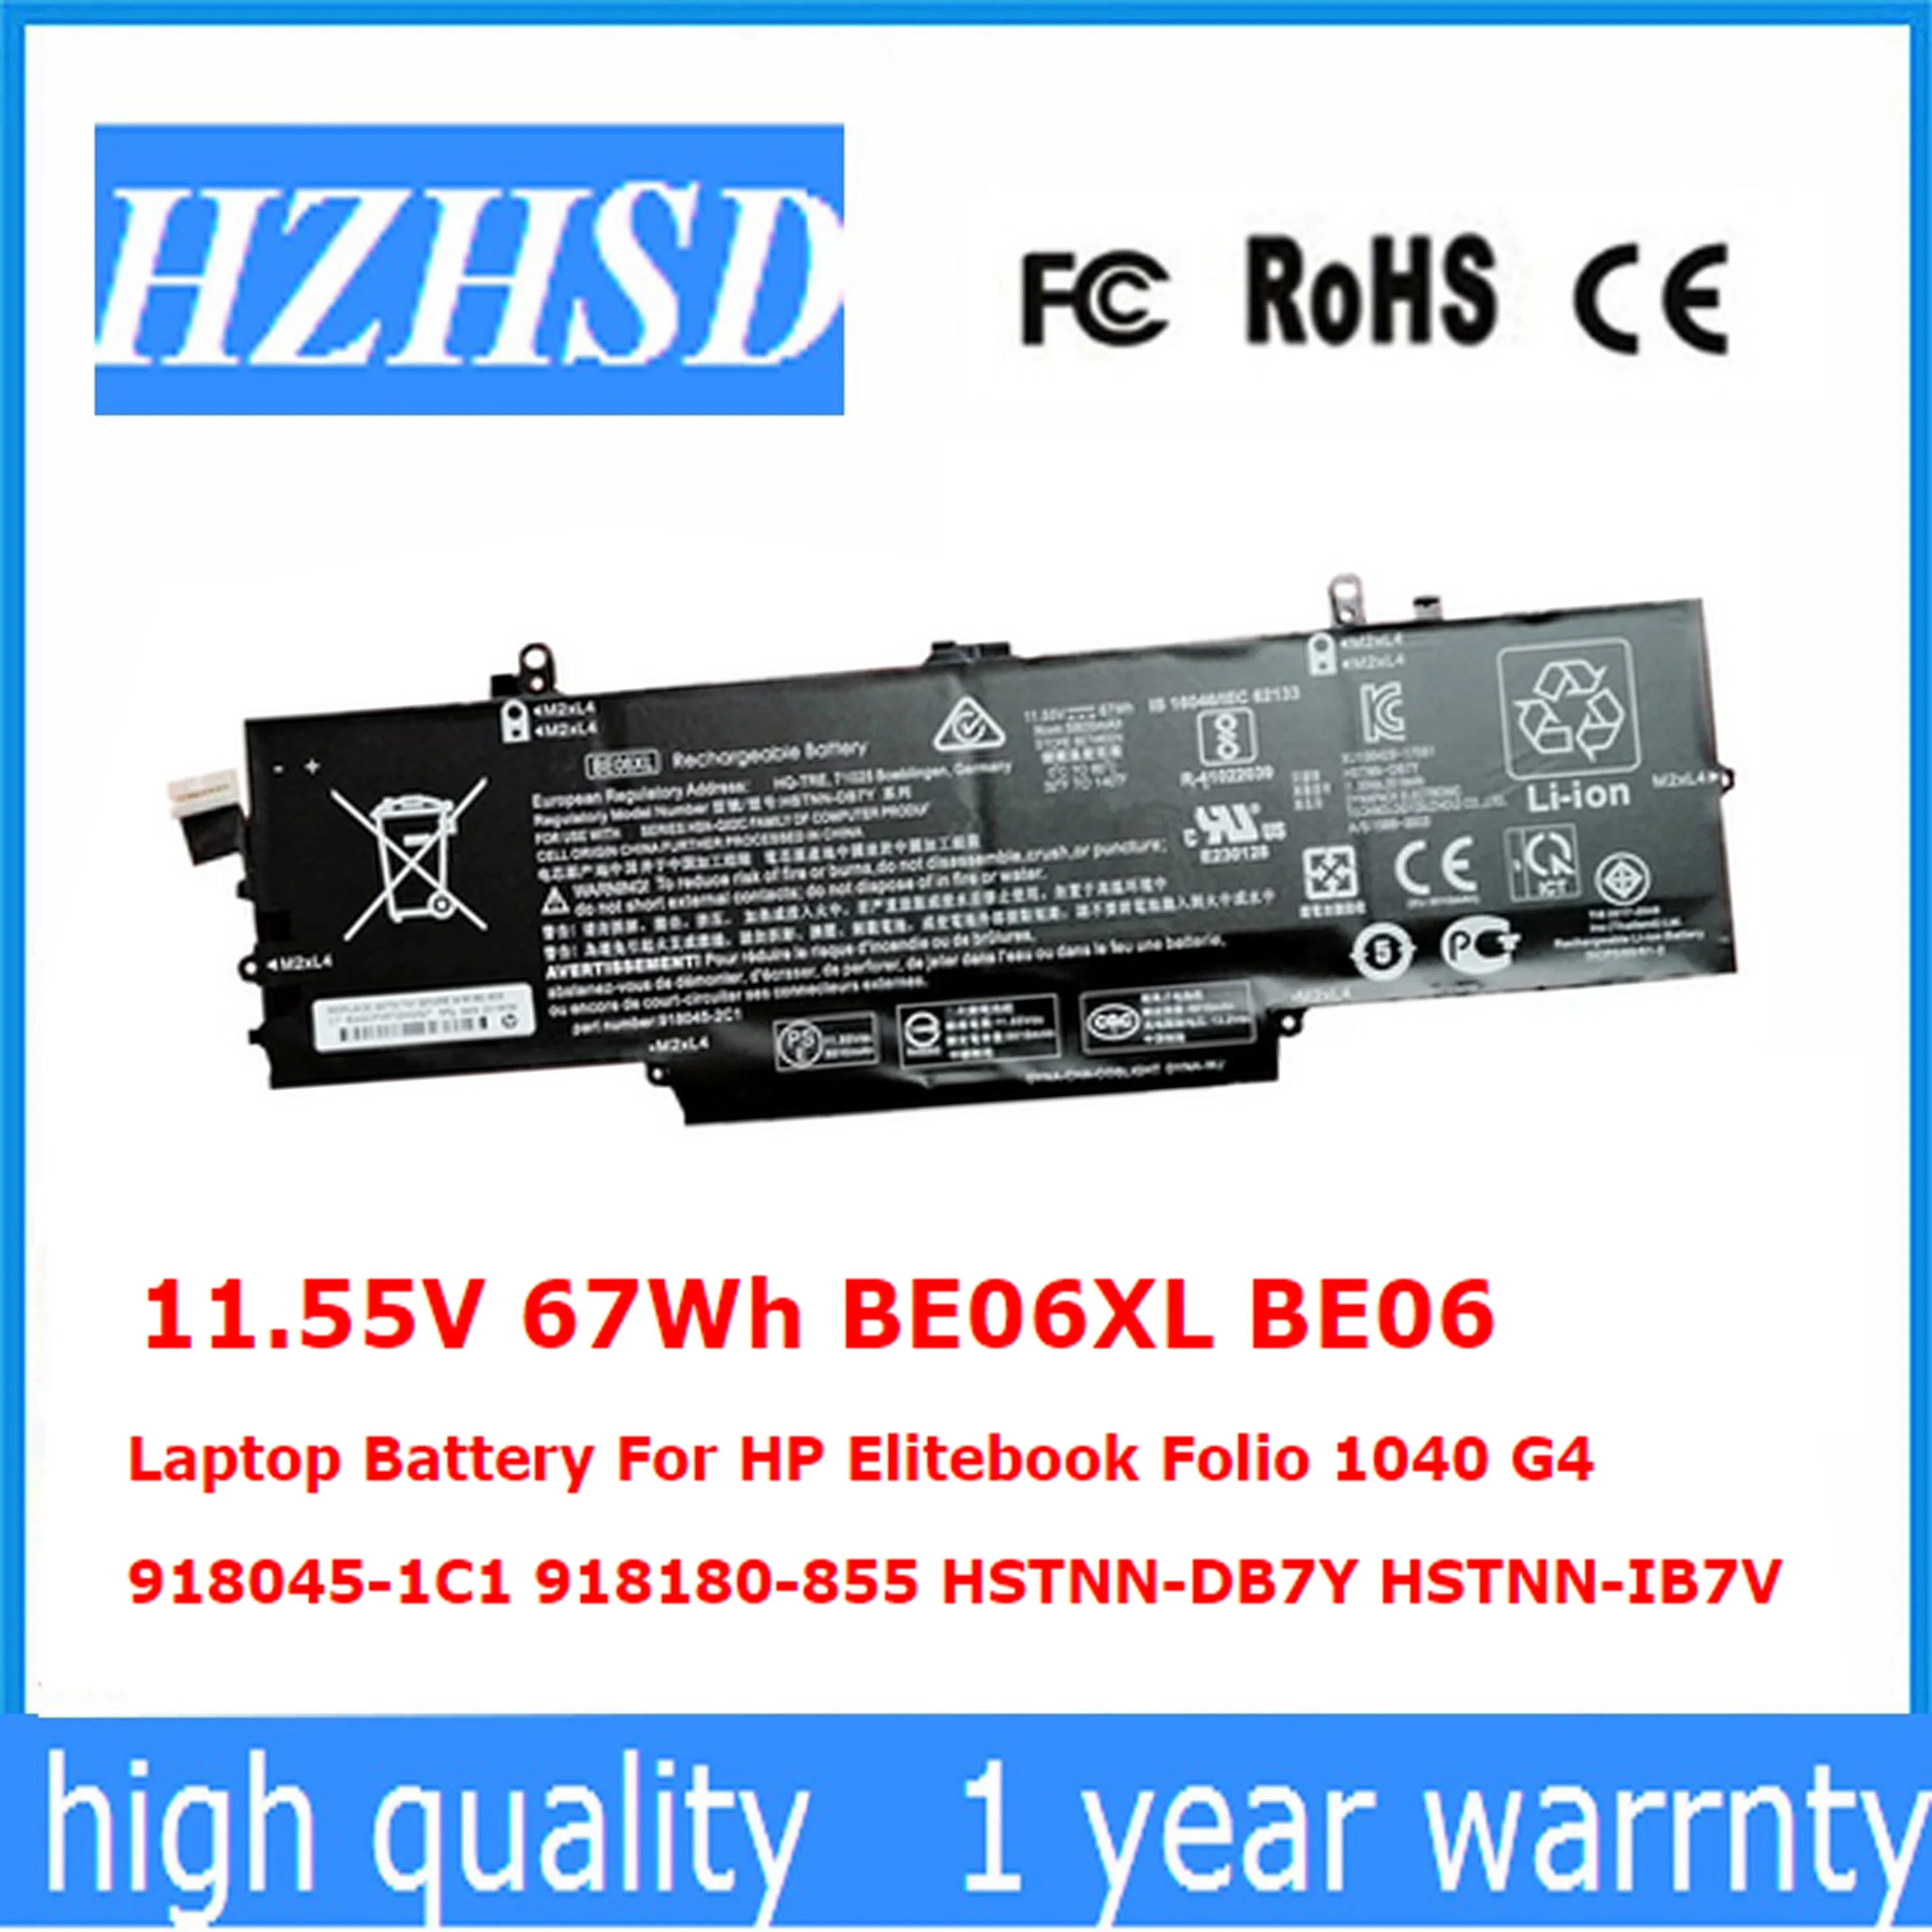 

11.55V 67Wh BE06XL BE06 Laptop Battery For HP Elitebook Folio 1040 G4 918045-1C1 918180-855 HSTNN-DB7Y HSTNN-IB7V